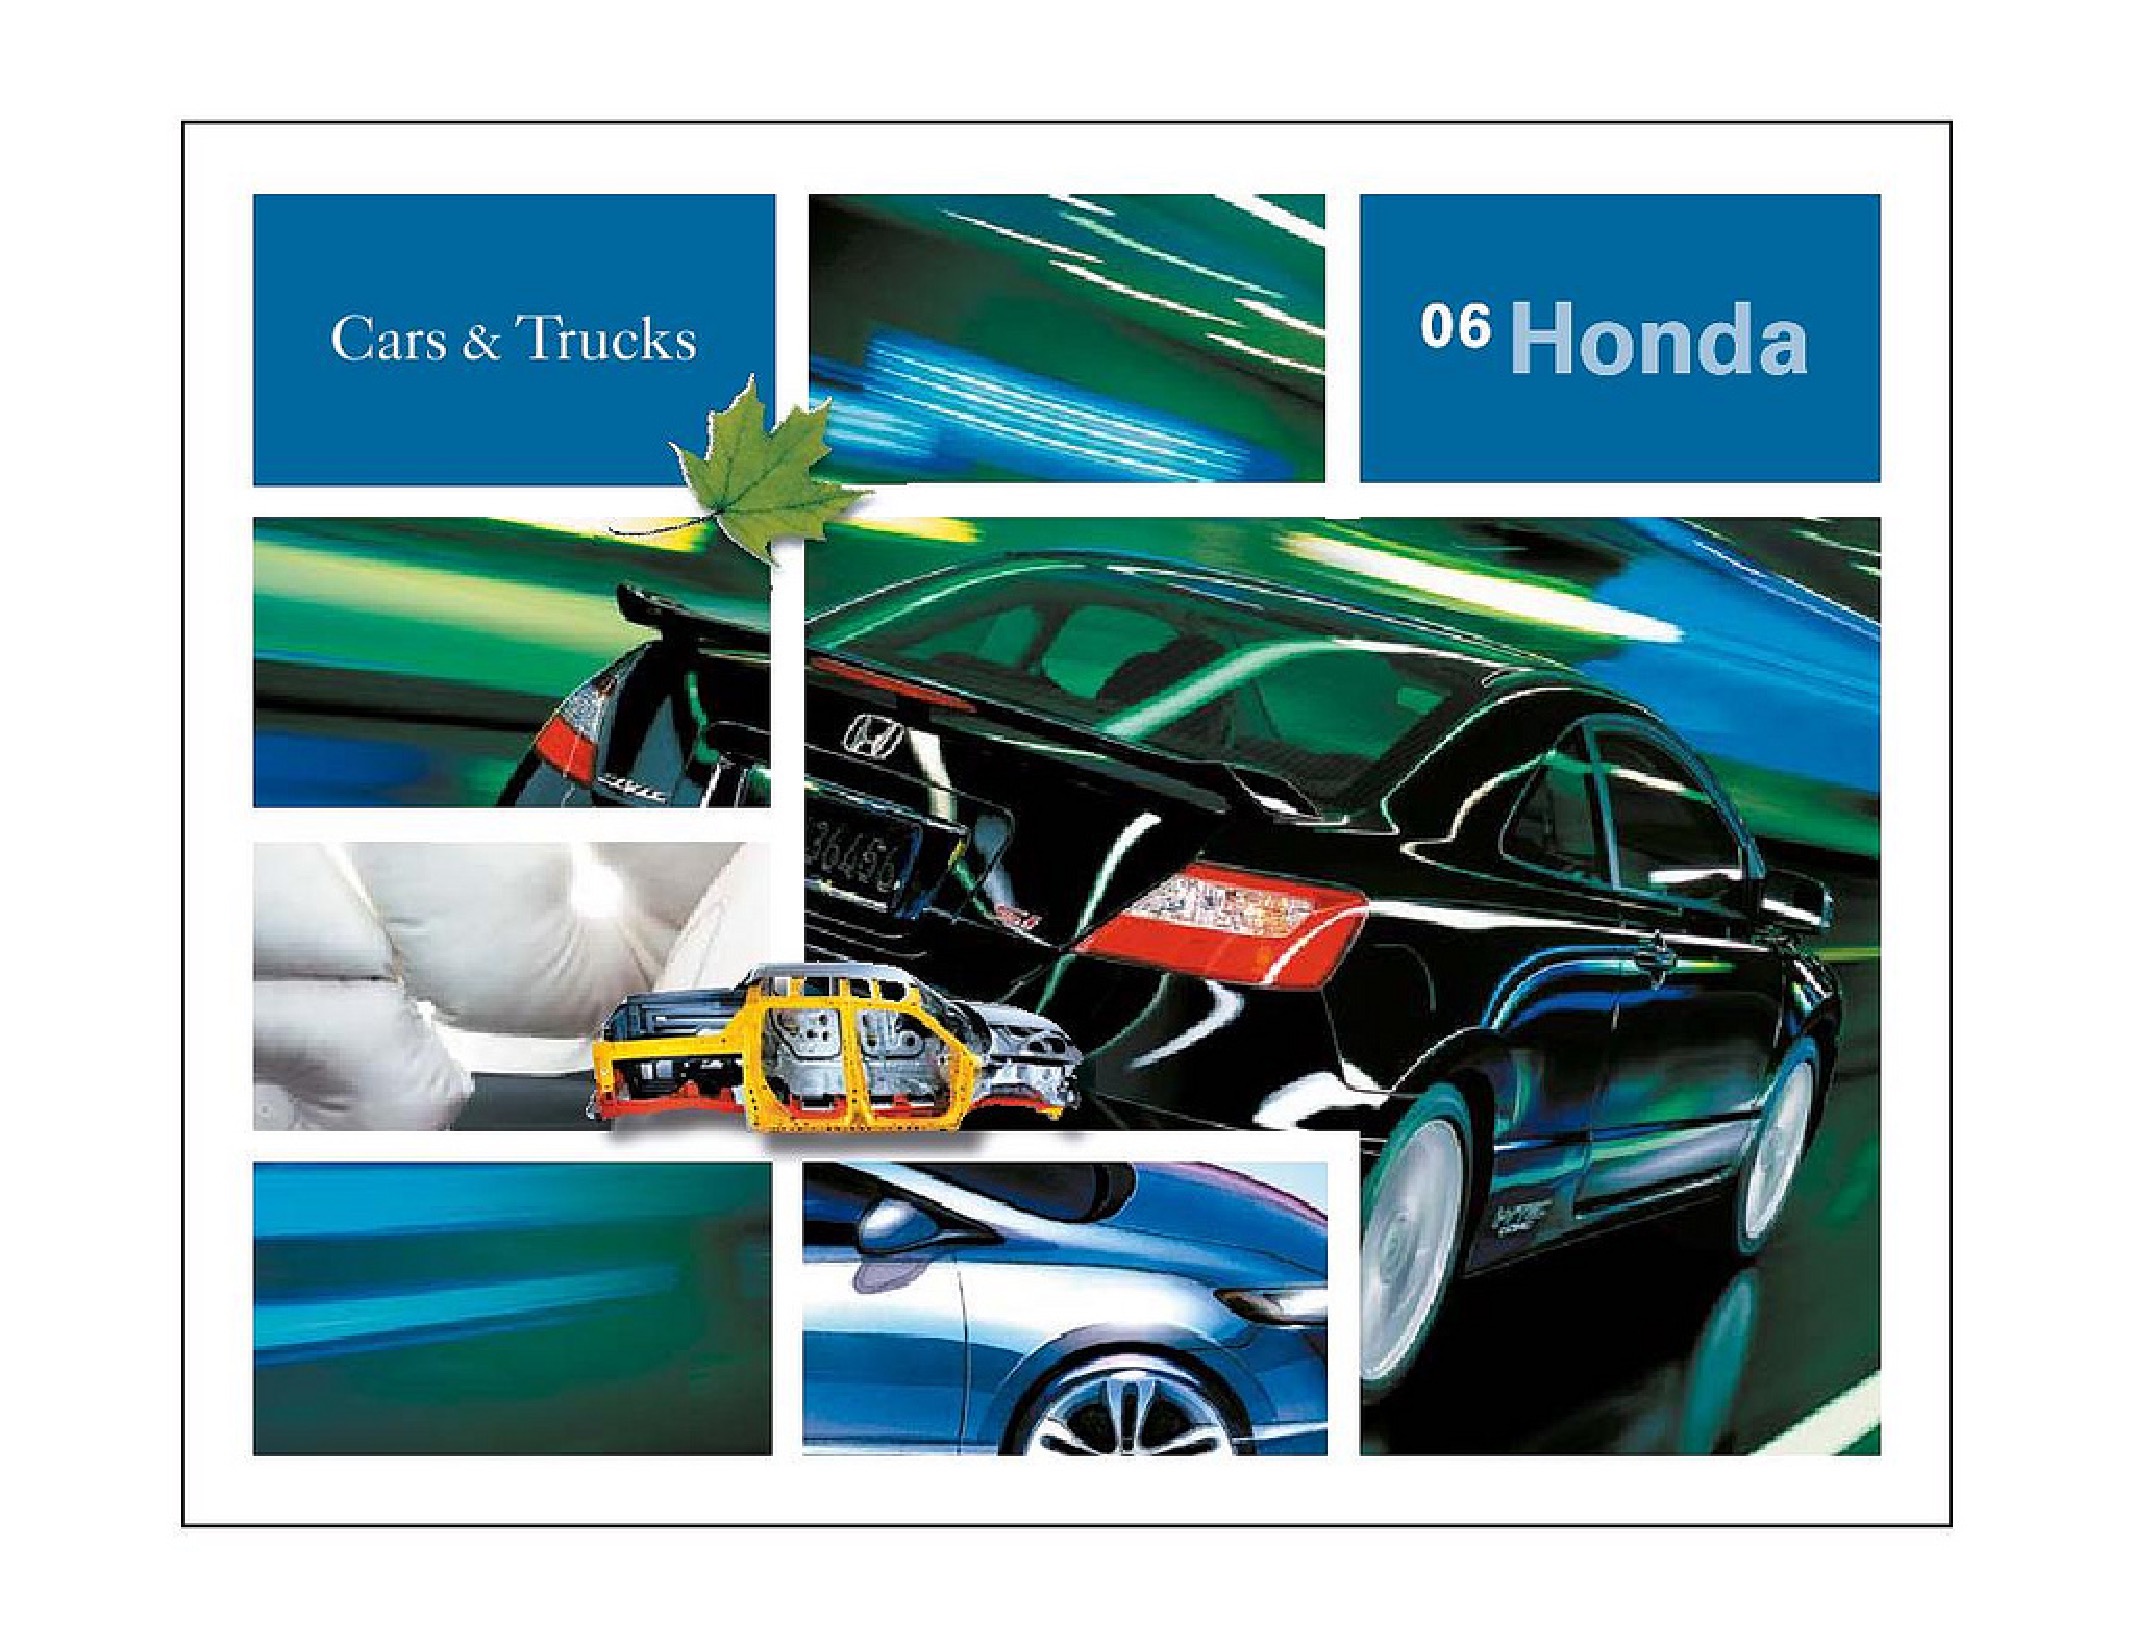 2006 Honda Model Range Brochure